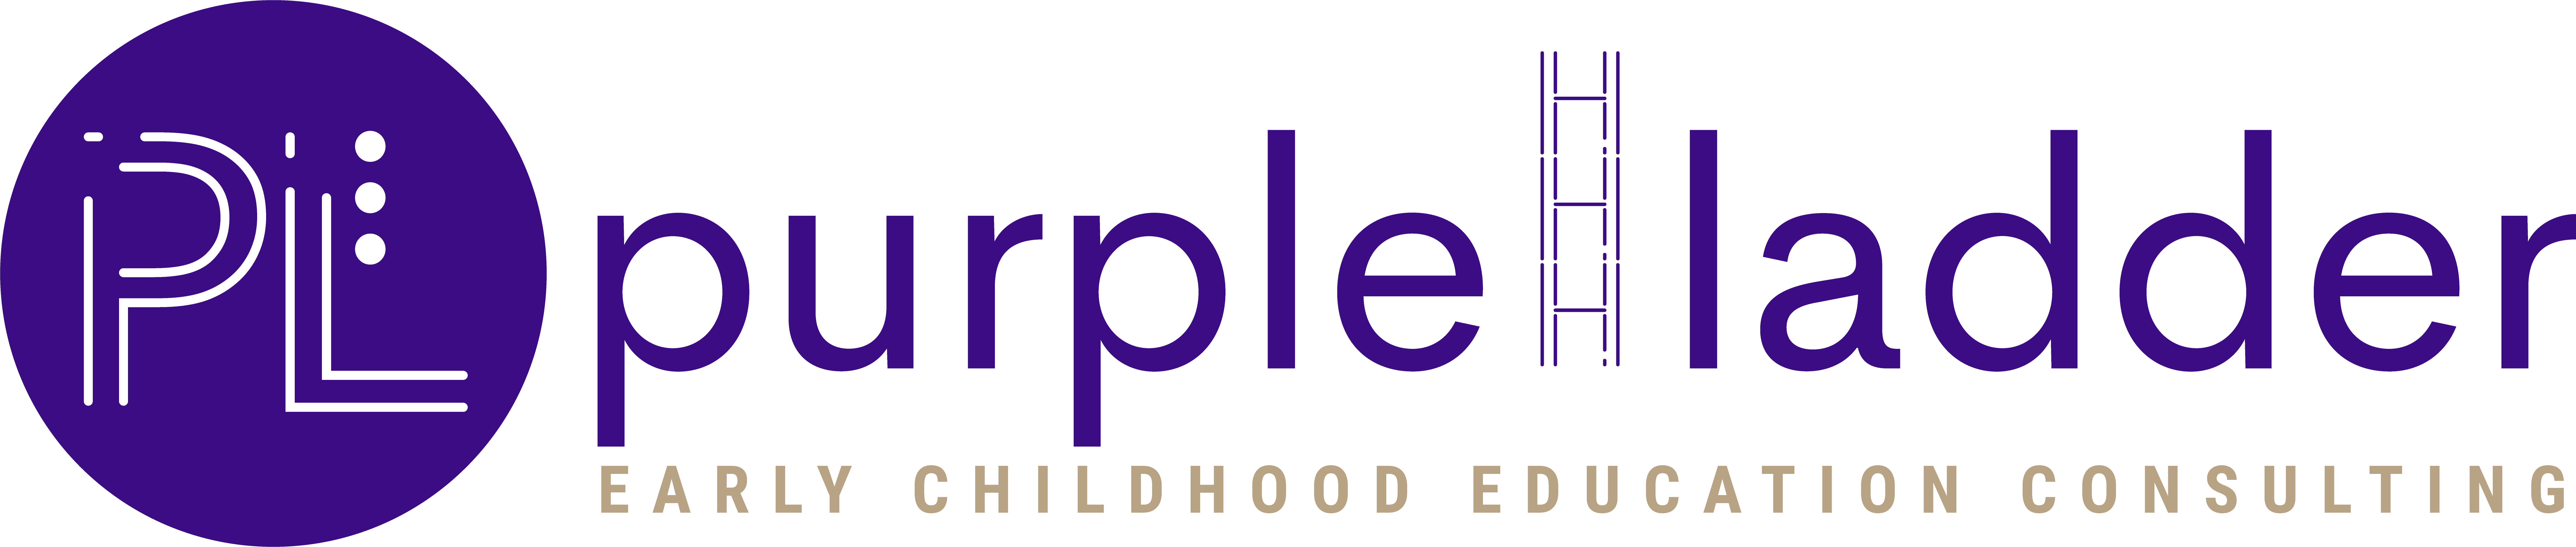 Purple Ladder, LLC Logo